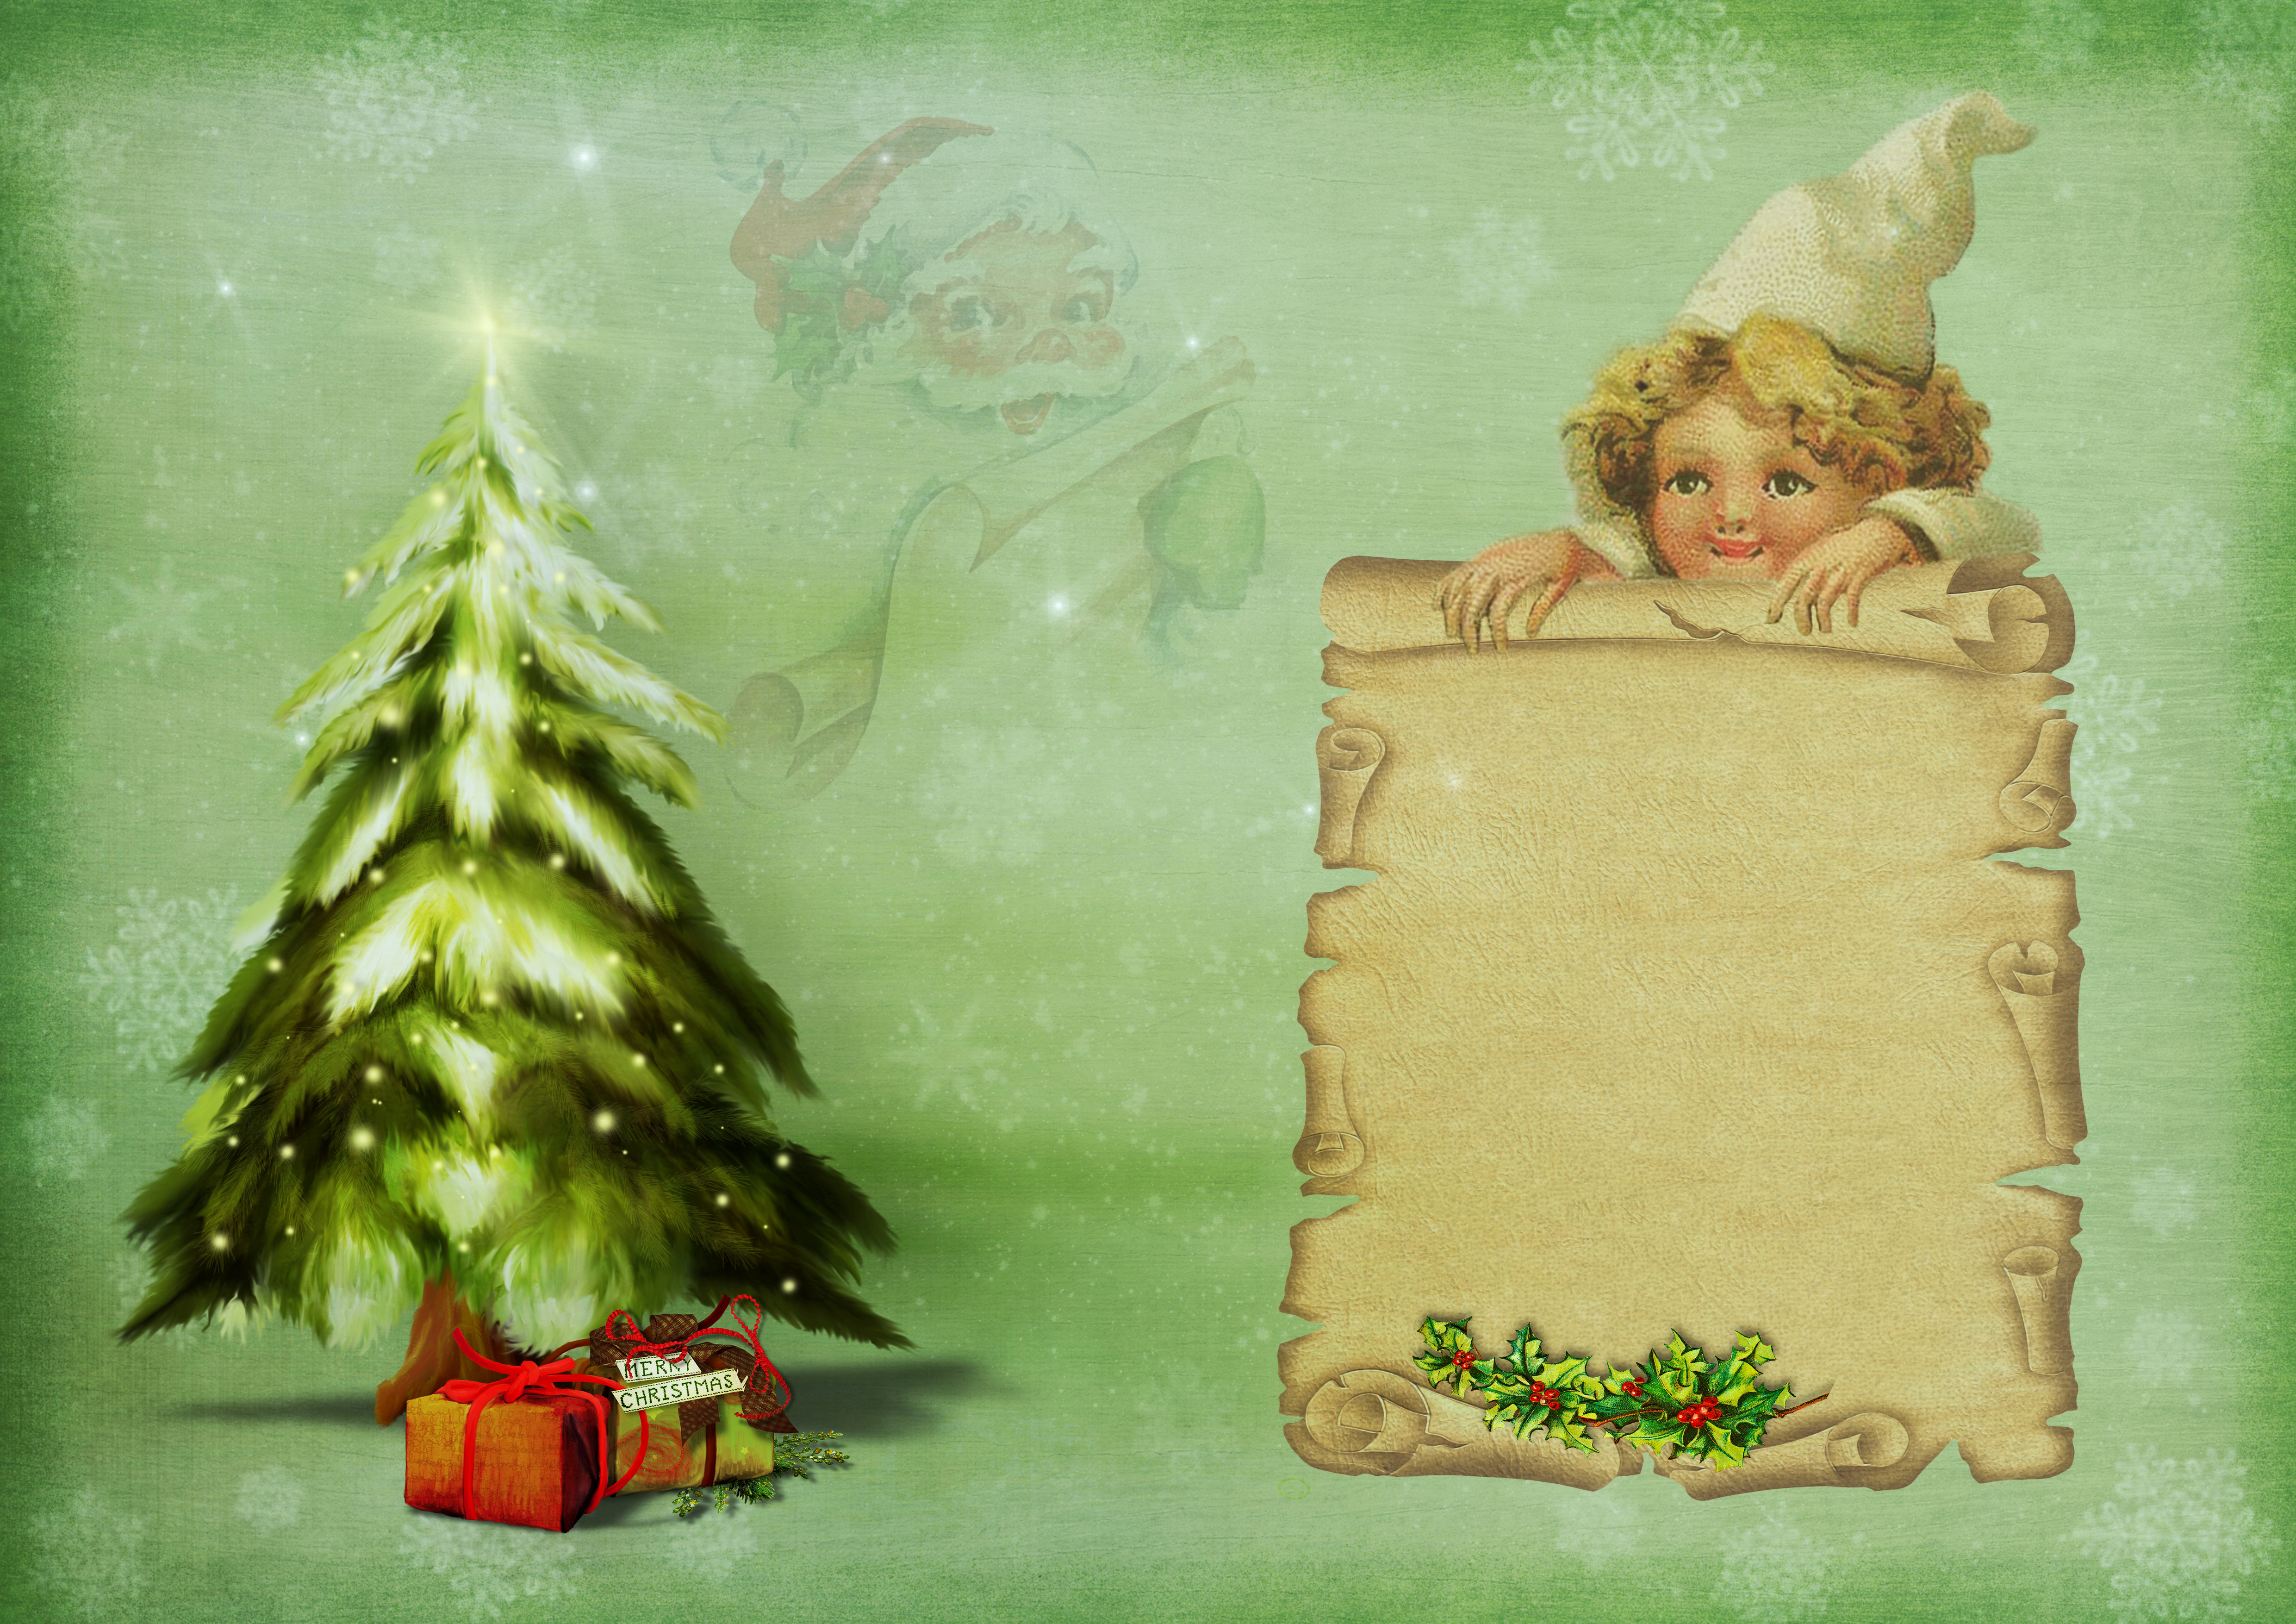 Free Image, christmas motive, santa claus, christmas tree, gifts, child, written scroll, wish list, cute, xmas card, shine, shabby, chic, scrapbook, wallpaper, winter, old, vintage, greeting card, green, fir, christmas ornament